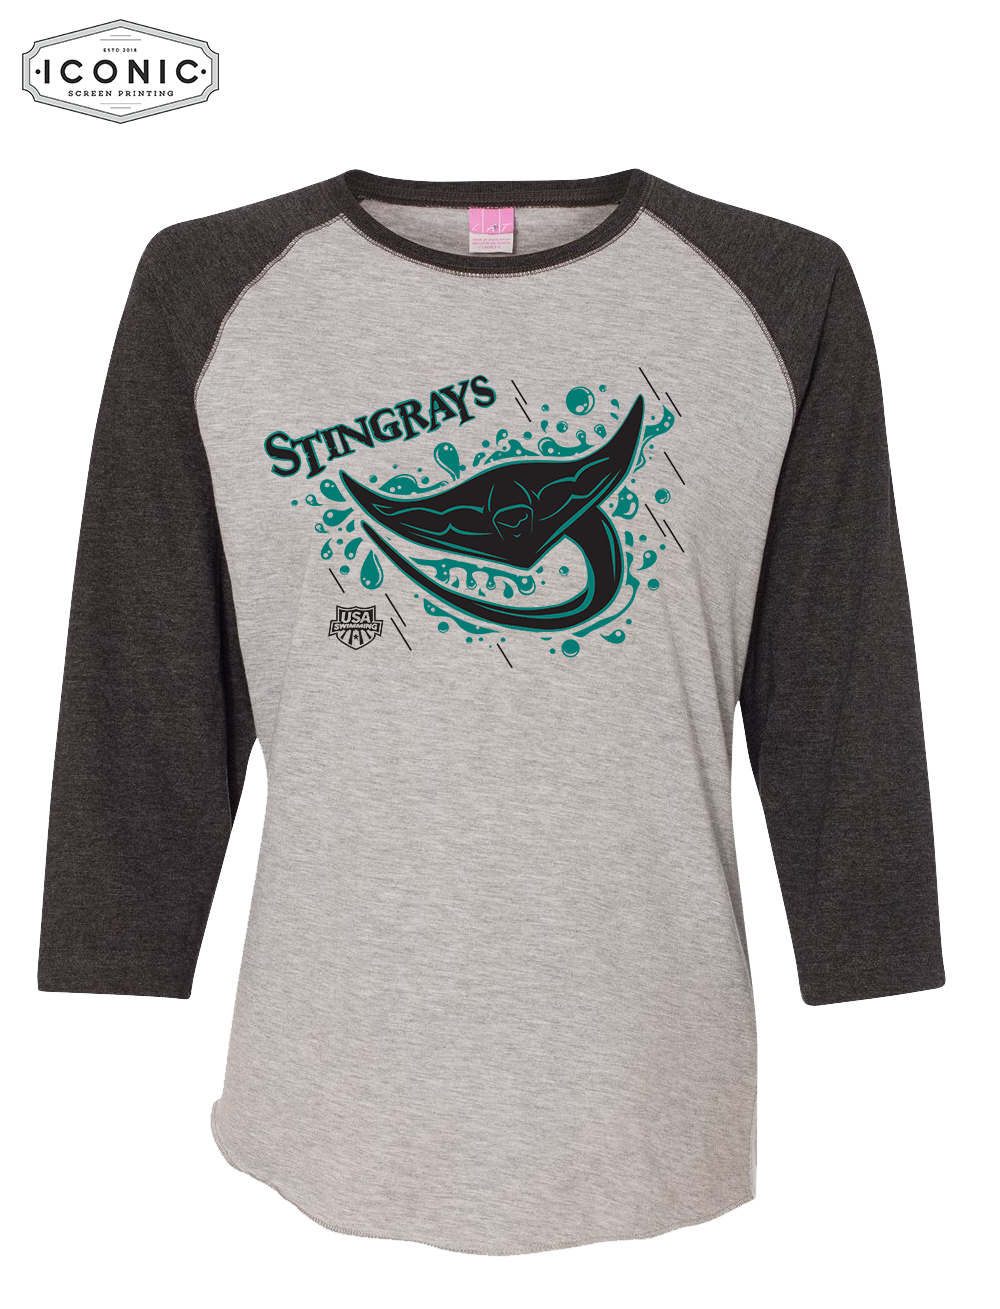 Stingrays - Women's Baseball Jersey 3/4 Sleeve